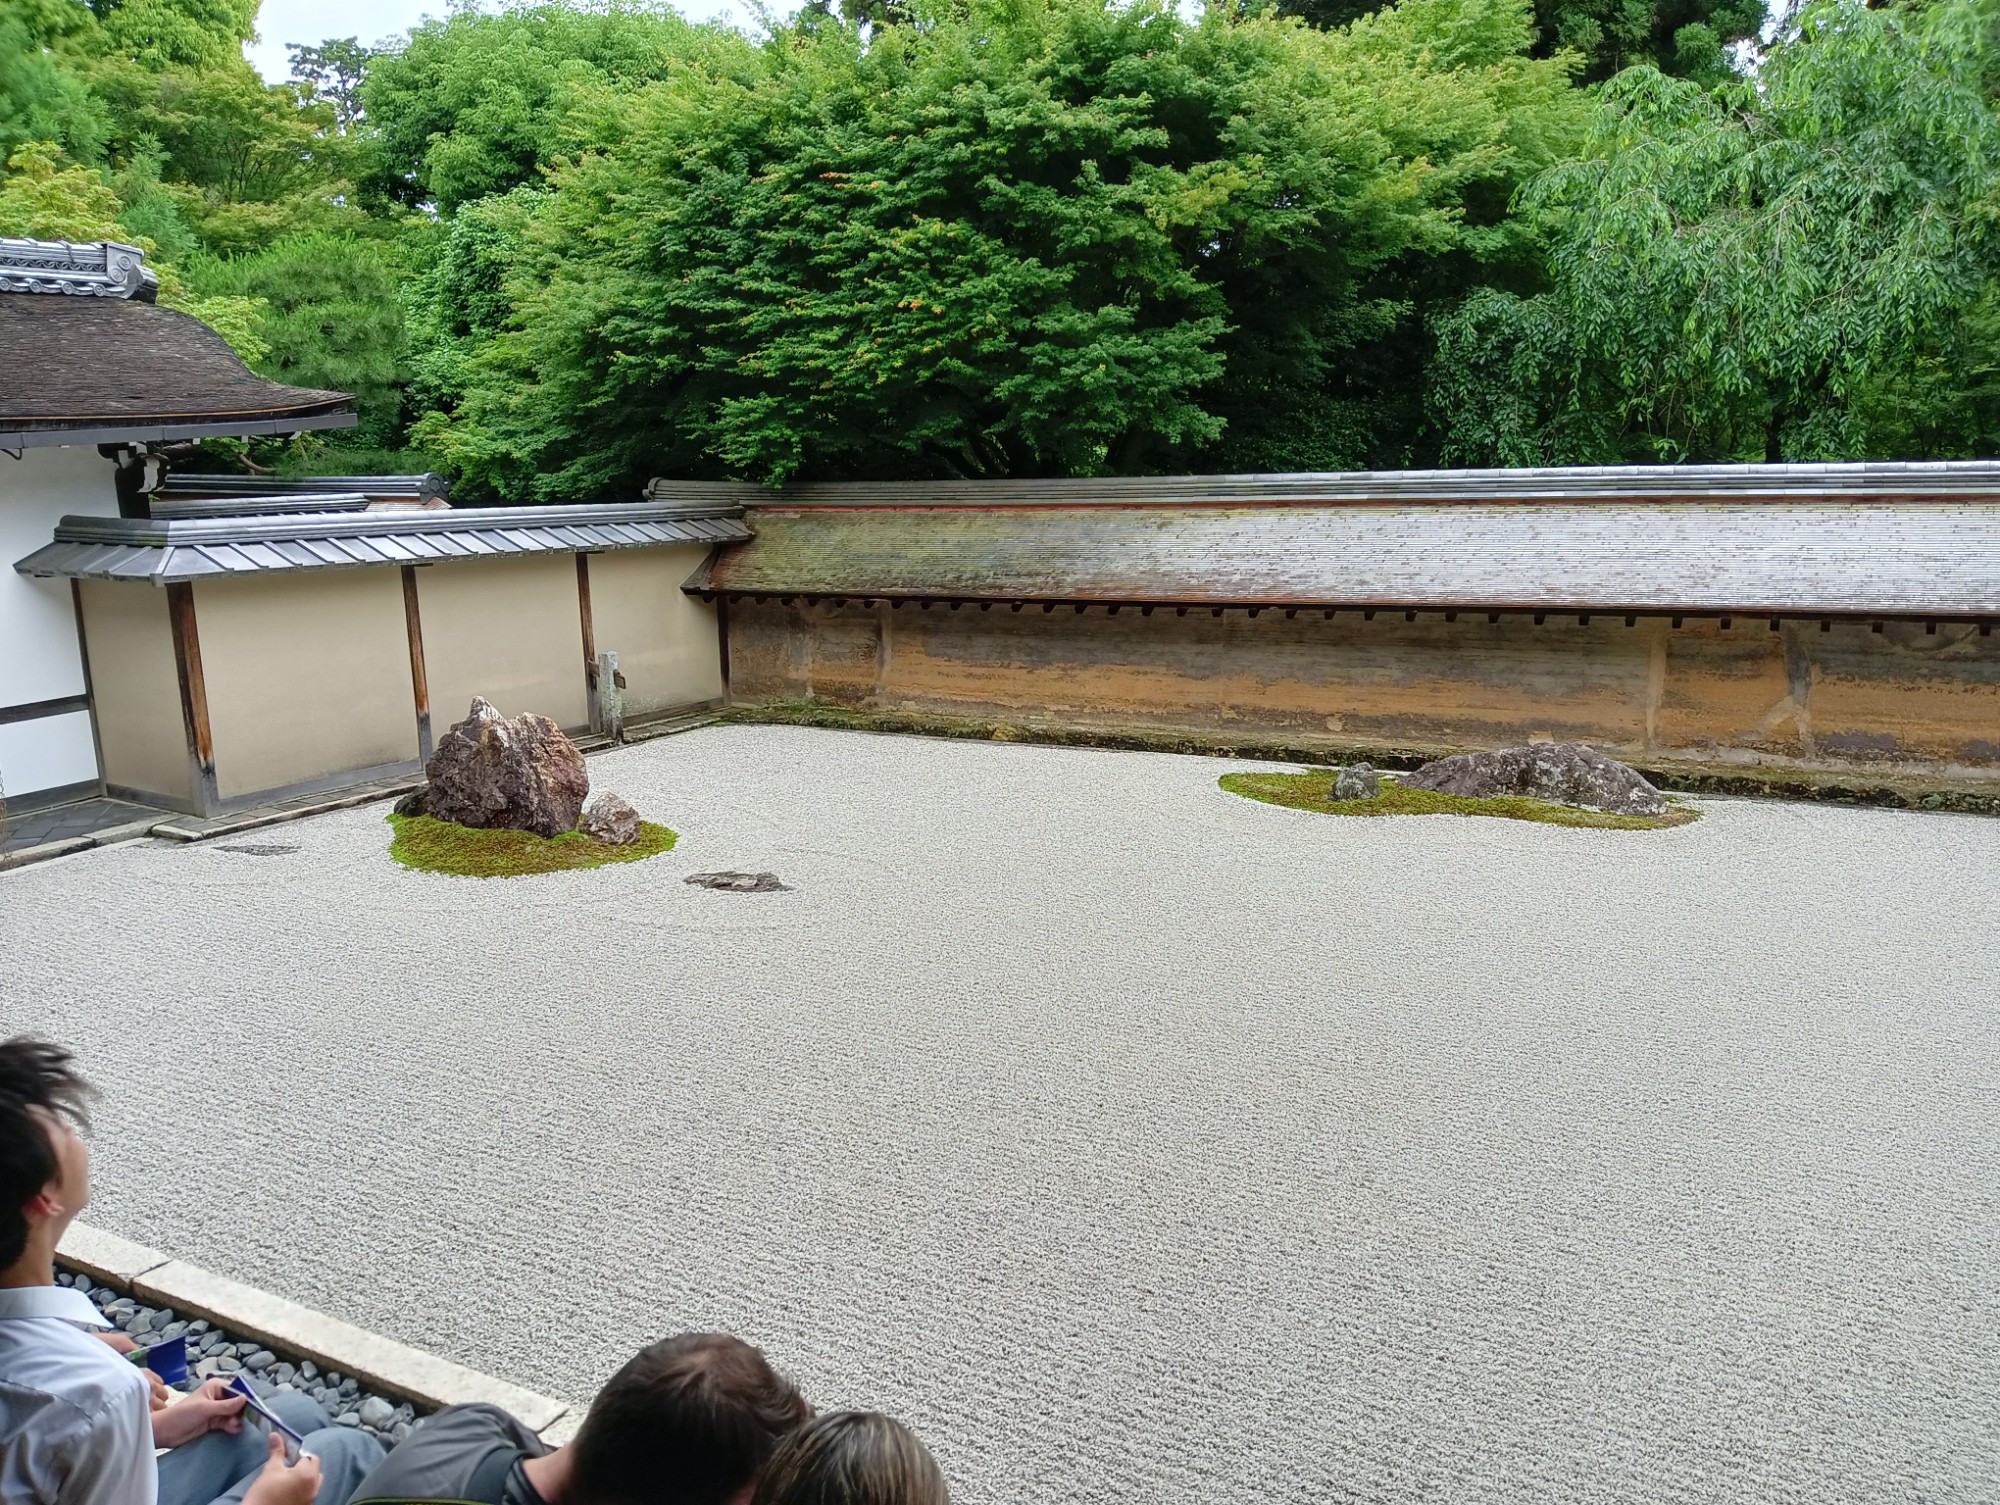 Rock Garden at Ryoanji Zen temple